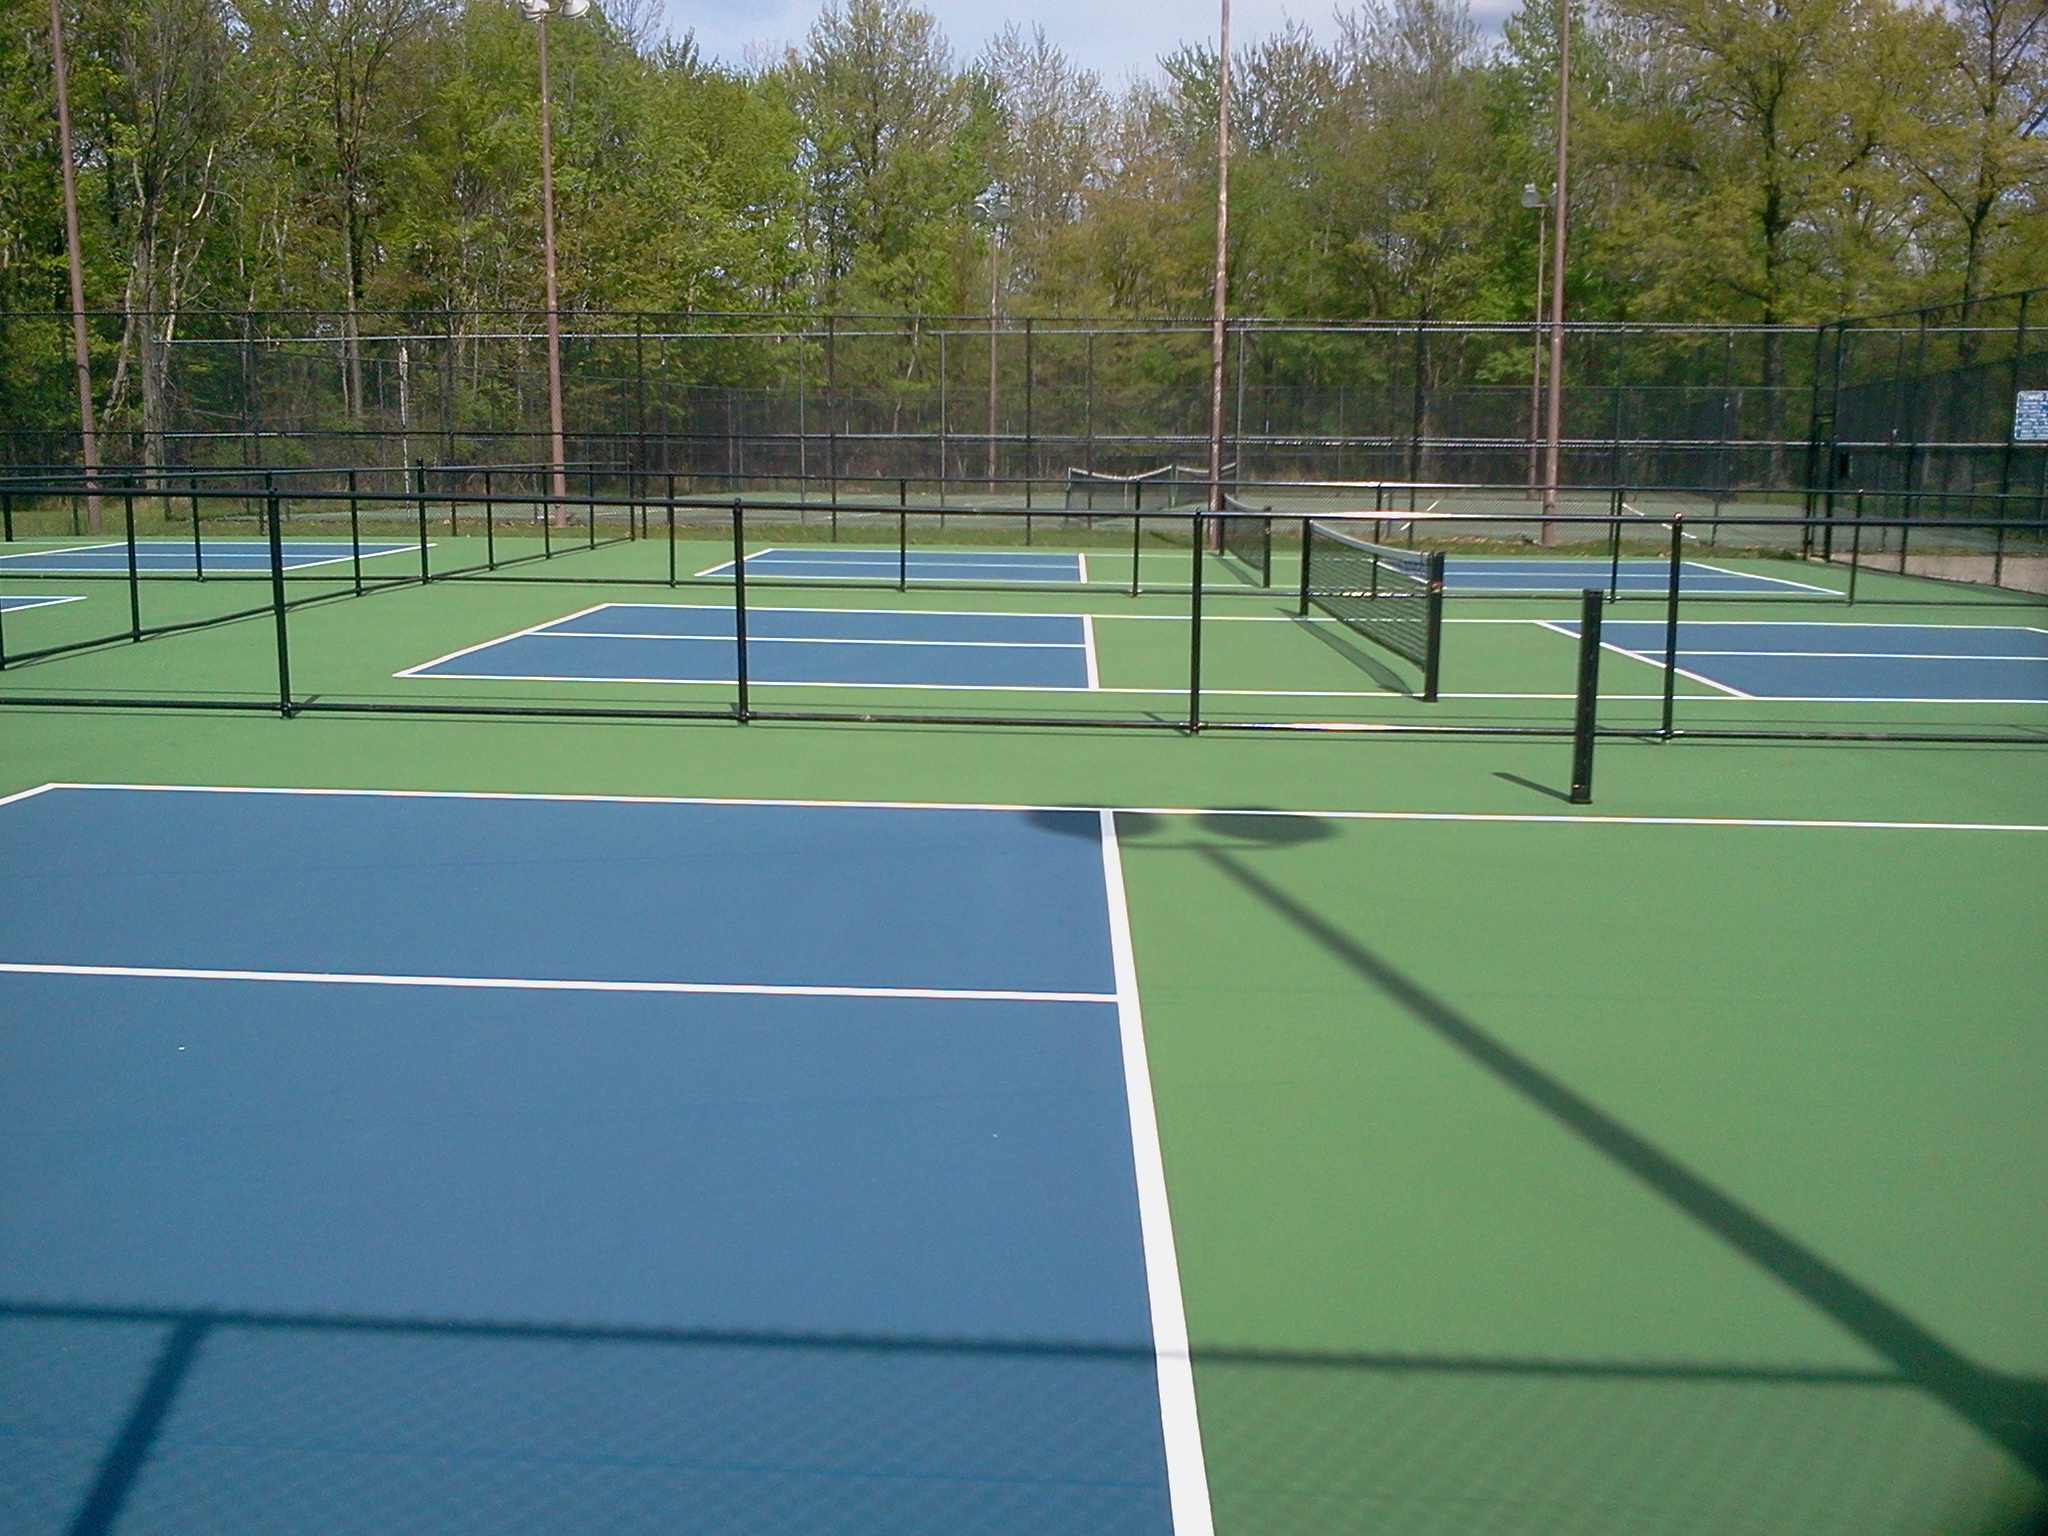 pickleball court construction tennis surfaces dimensions backyard diagram courts builders concrete played localtenniscourtresurfacing